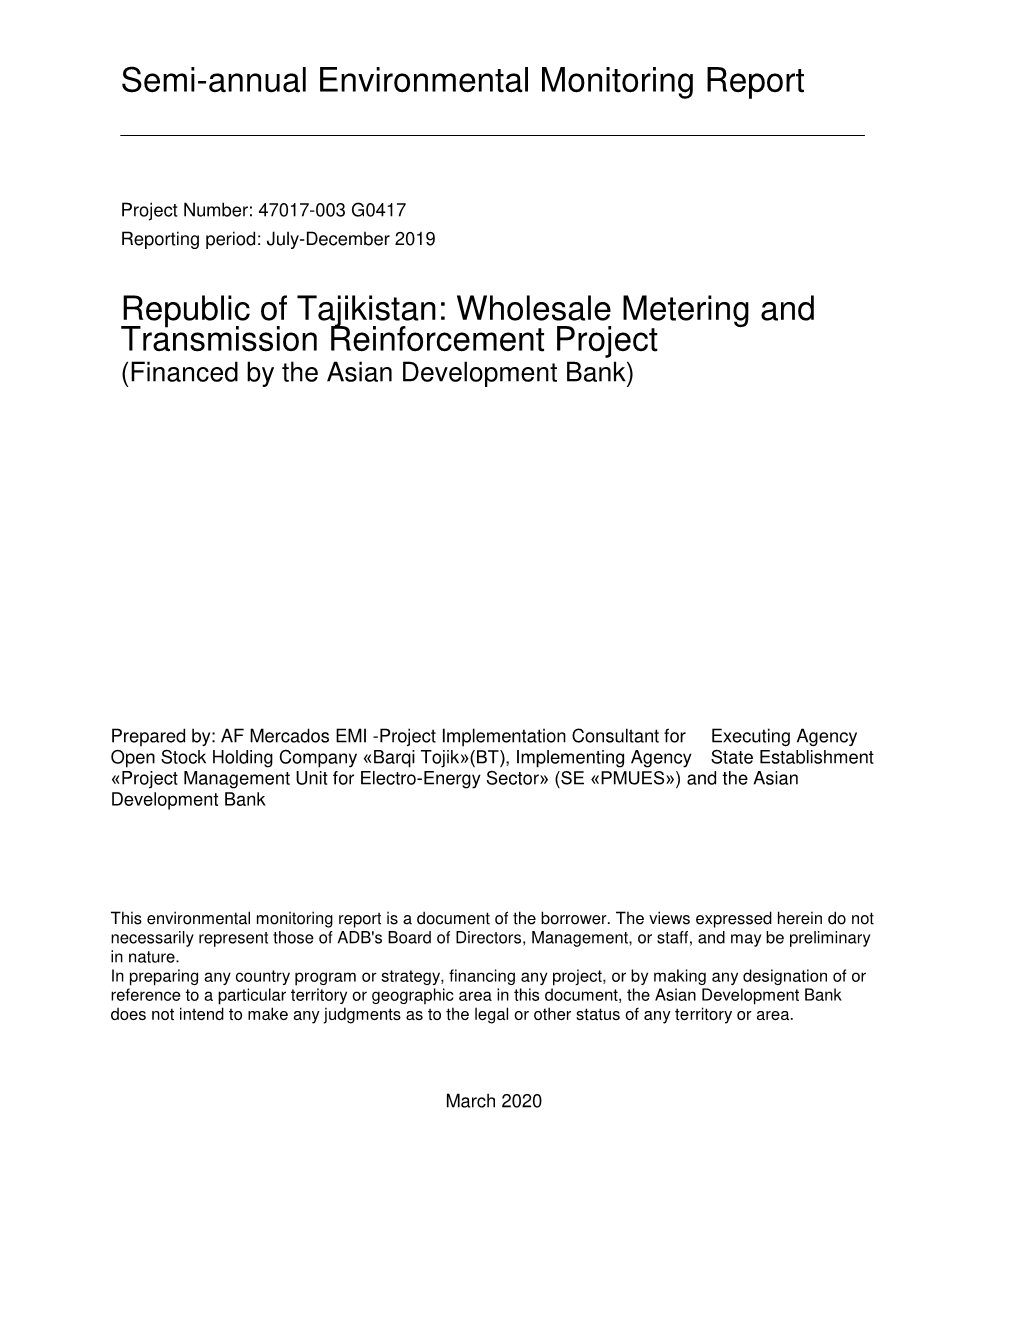 Semi-Annual Environmental Monitoring Report Republic Of